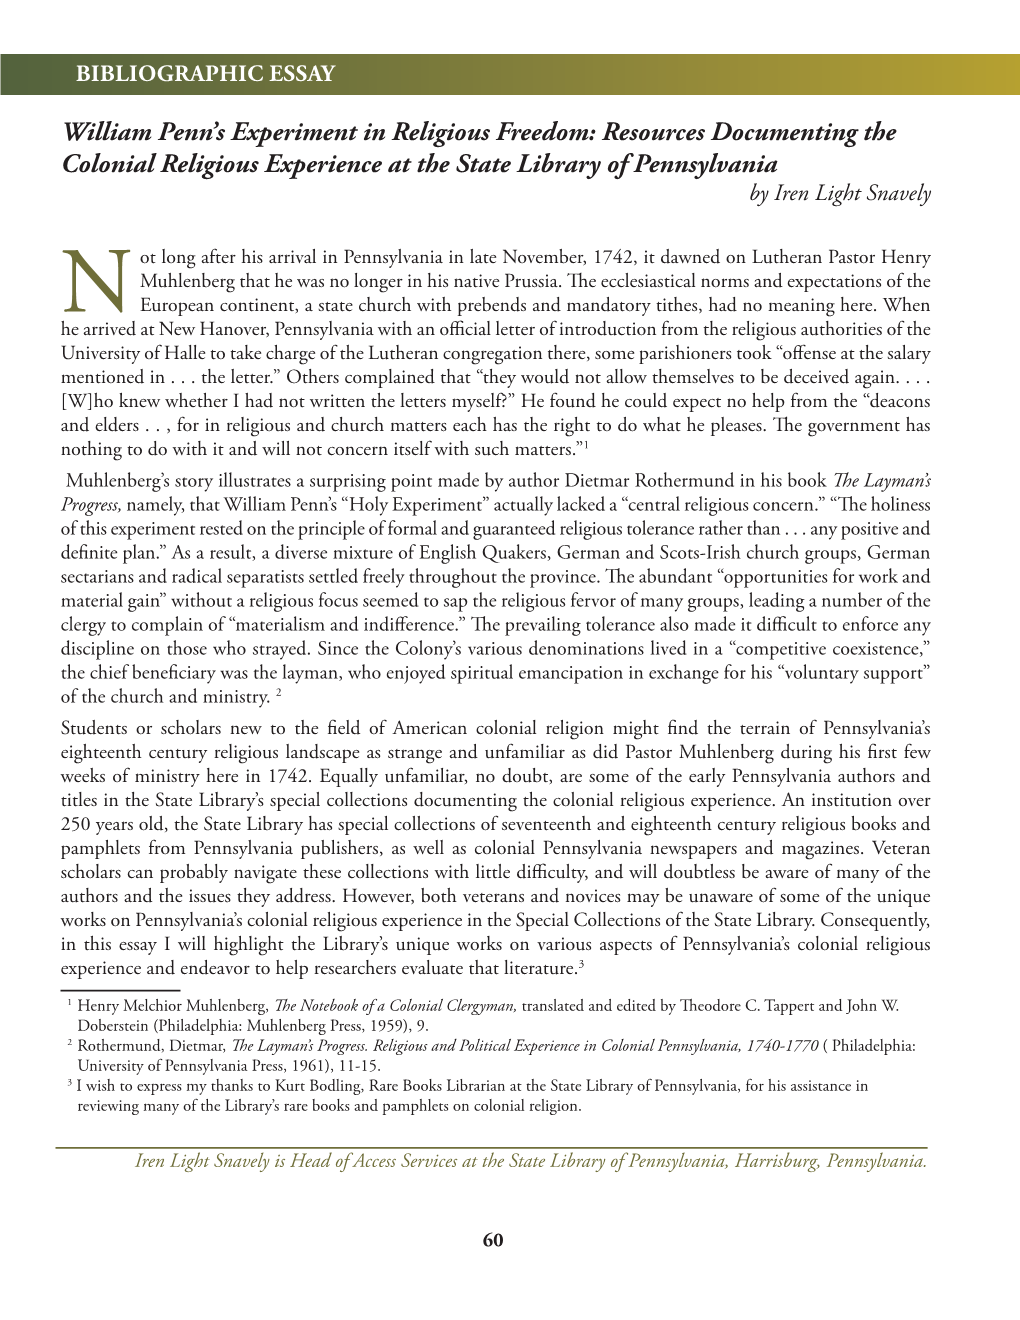 William Penn's Experiment in Religious Freedom